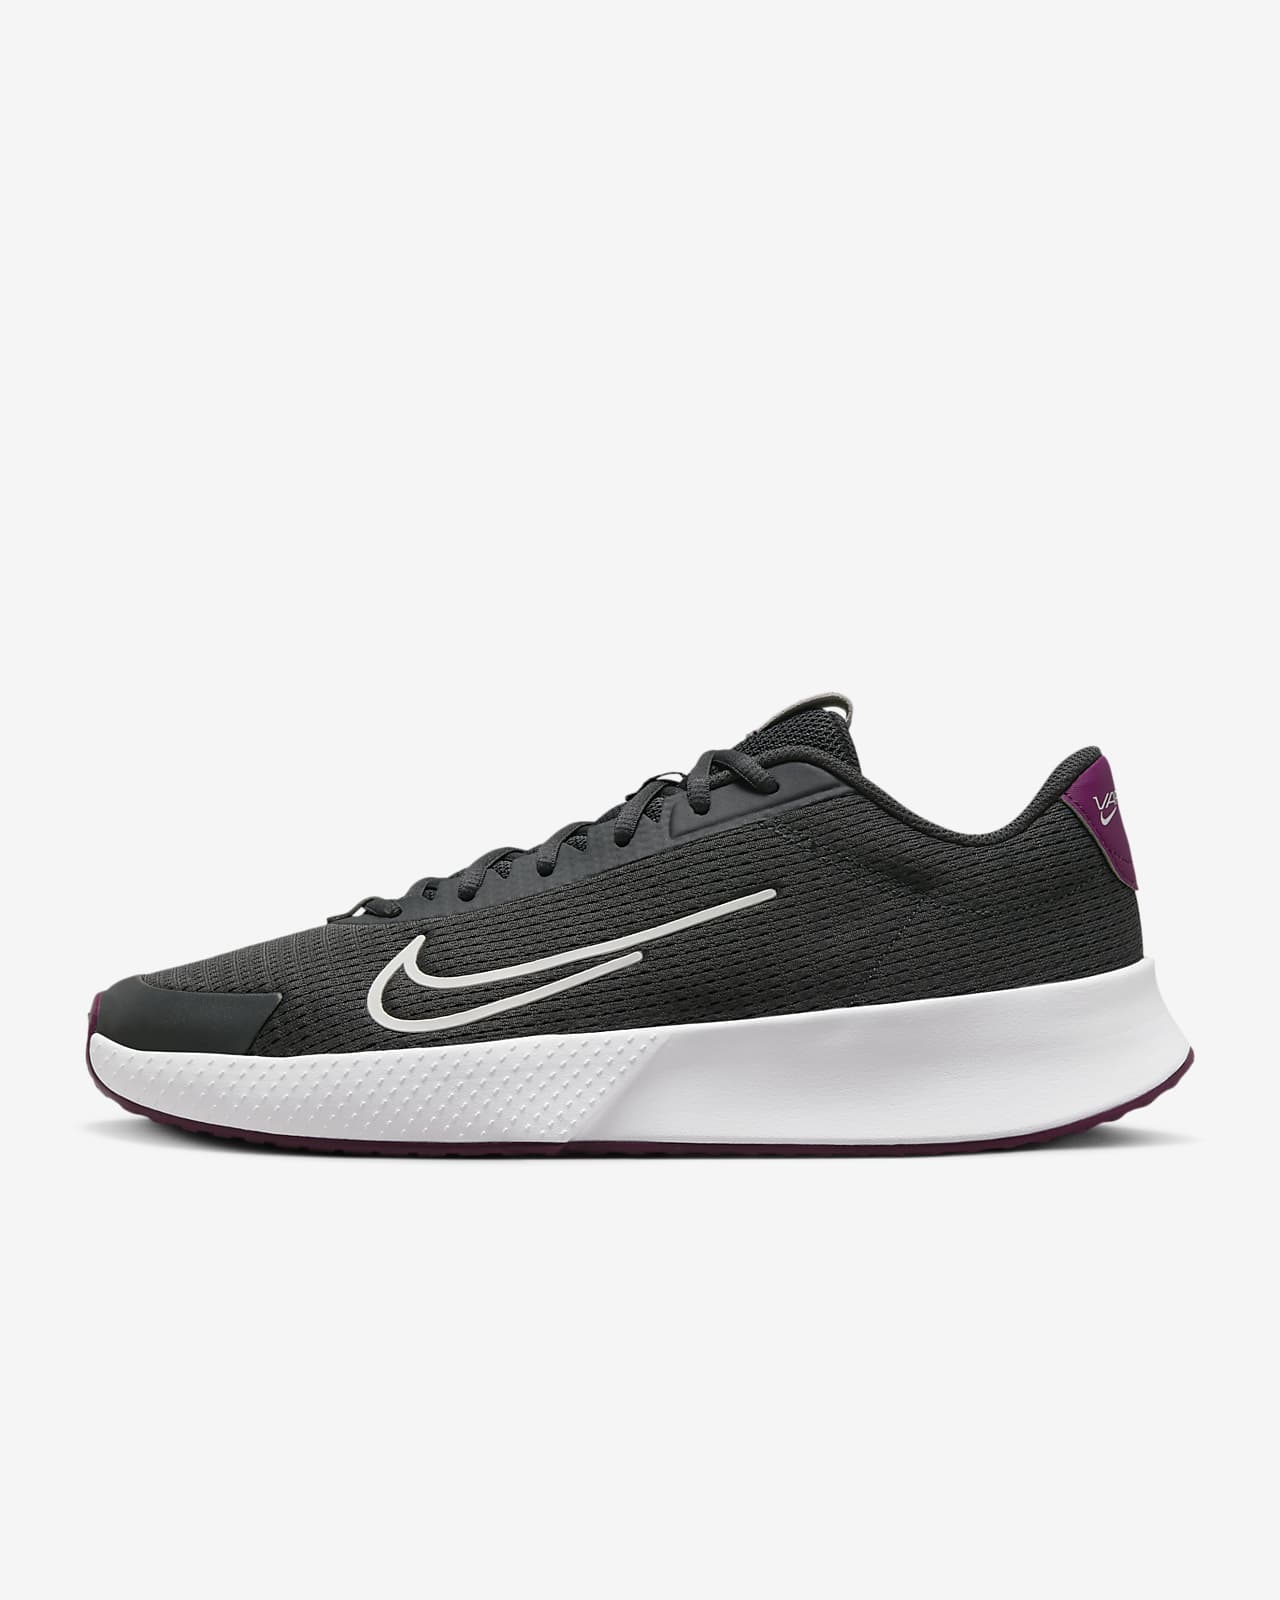 NikeCourt Vapor Lite 2 Men's Hard Court Tennis Shoes